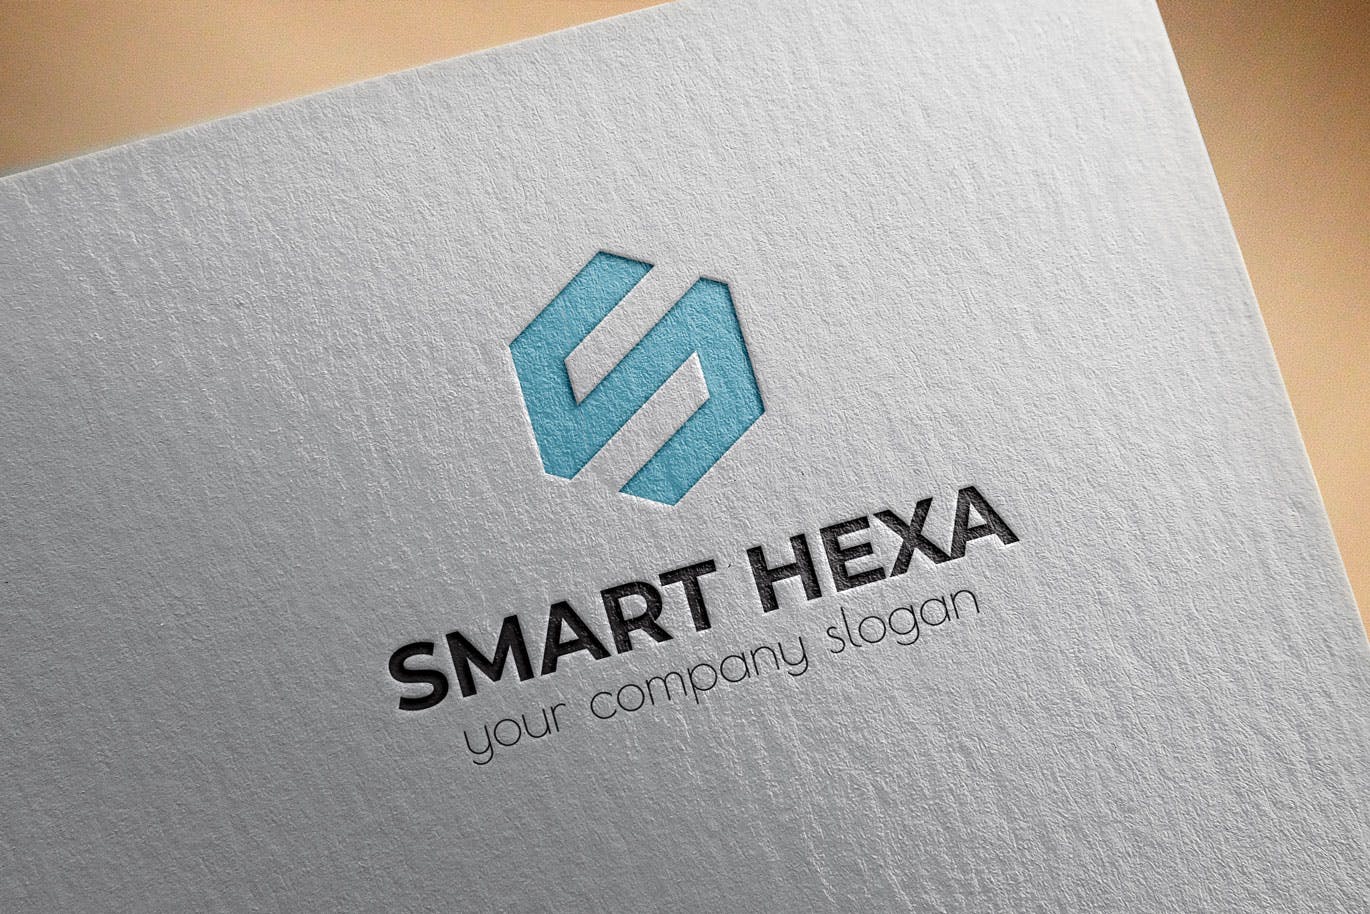 S字母图形Logo设计16图库精选模板 Smart Hexa Awesome Logo Template插图(2)